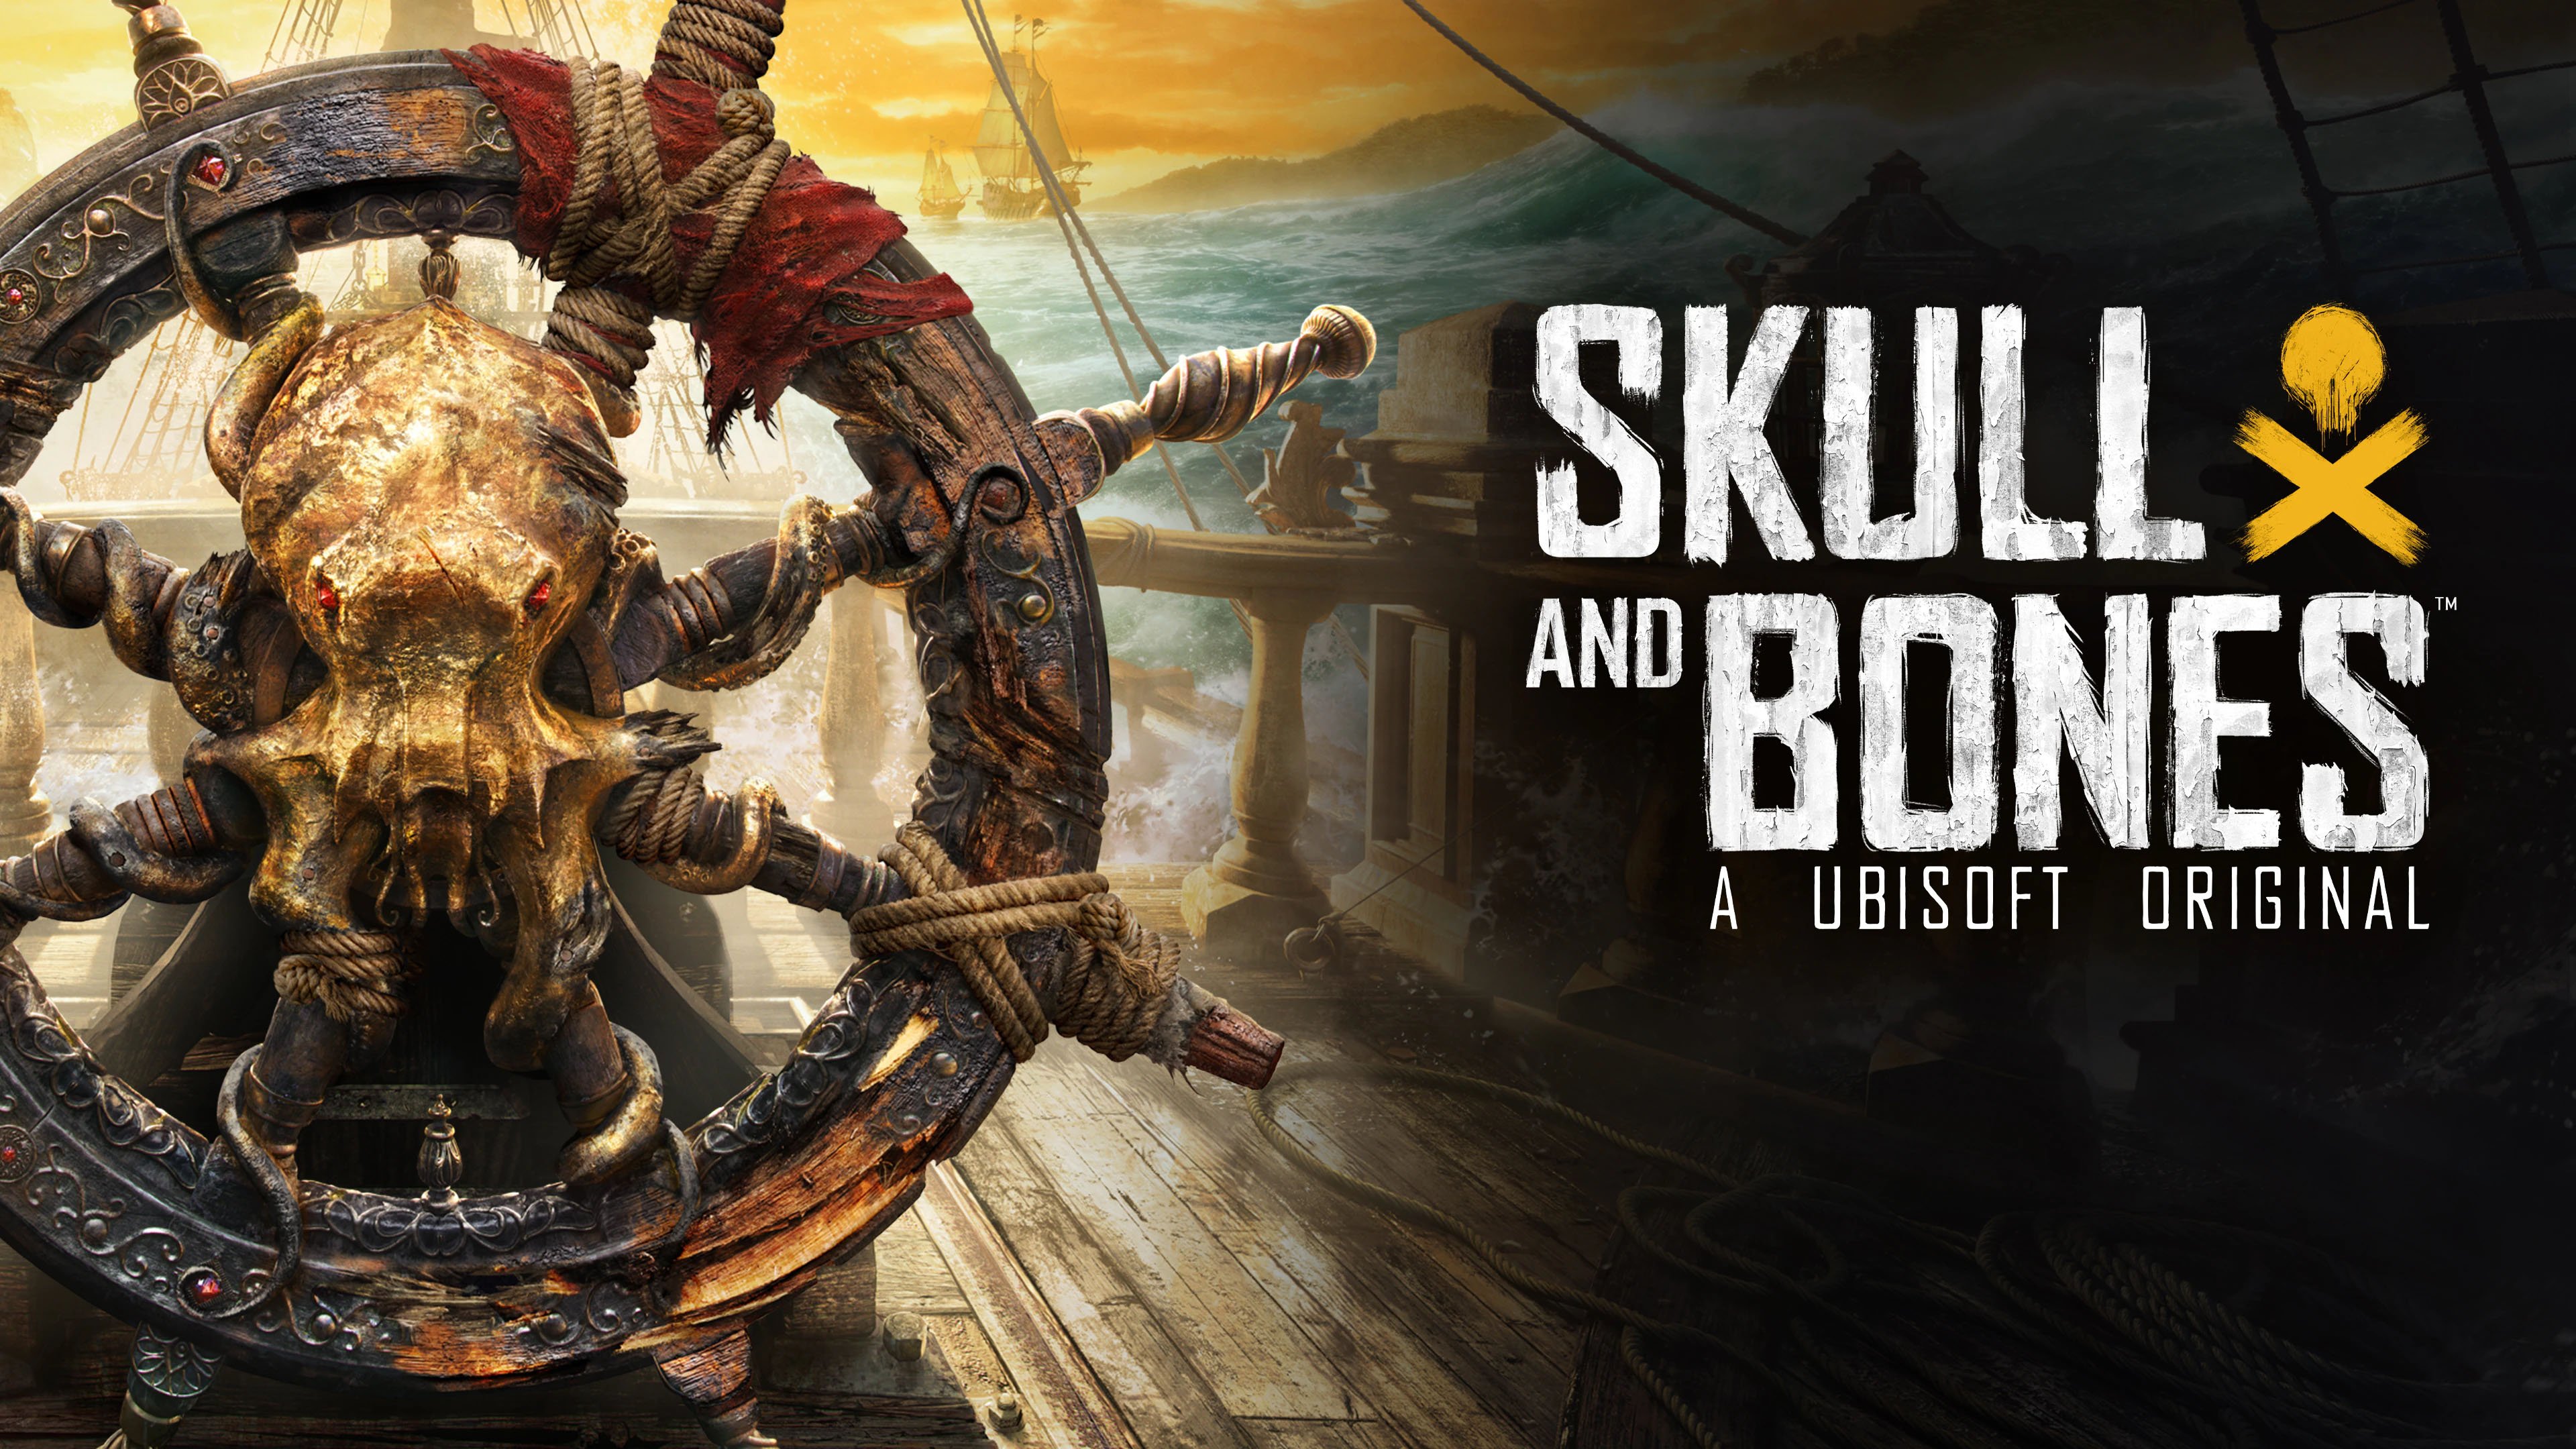 Skull & Bones gameplay footage confirms November release date